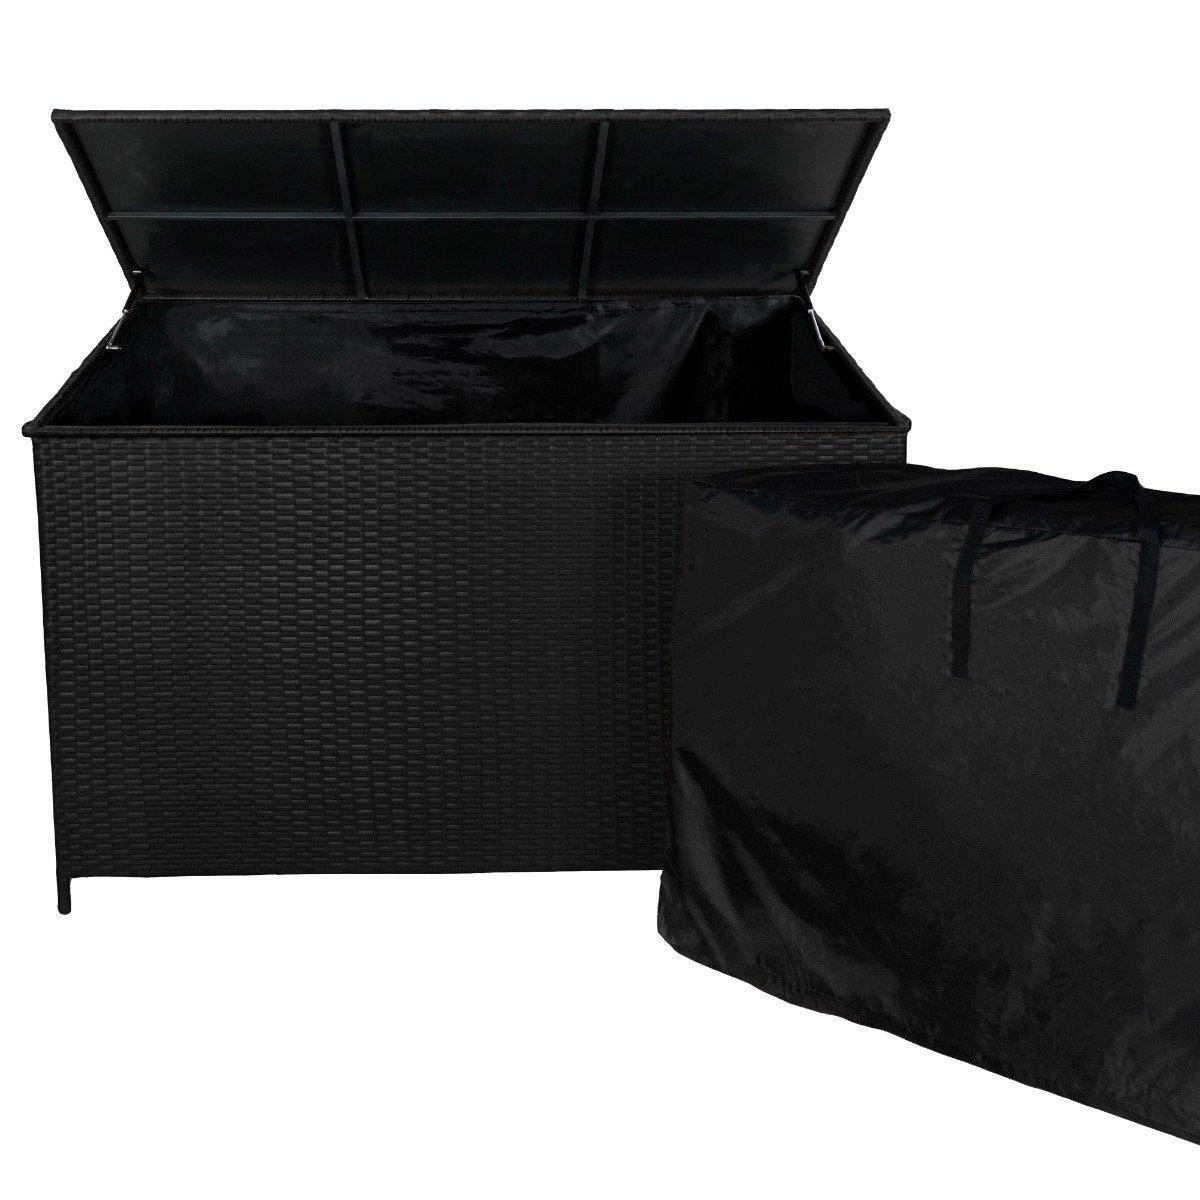 Rattan Garden Storage Black Box & Waterproof Carry Bag Large - Black - image 1